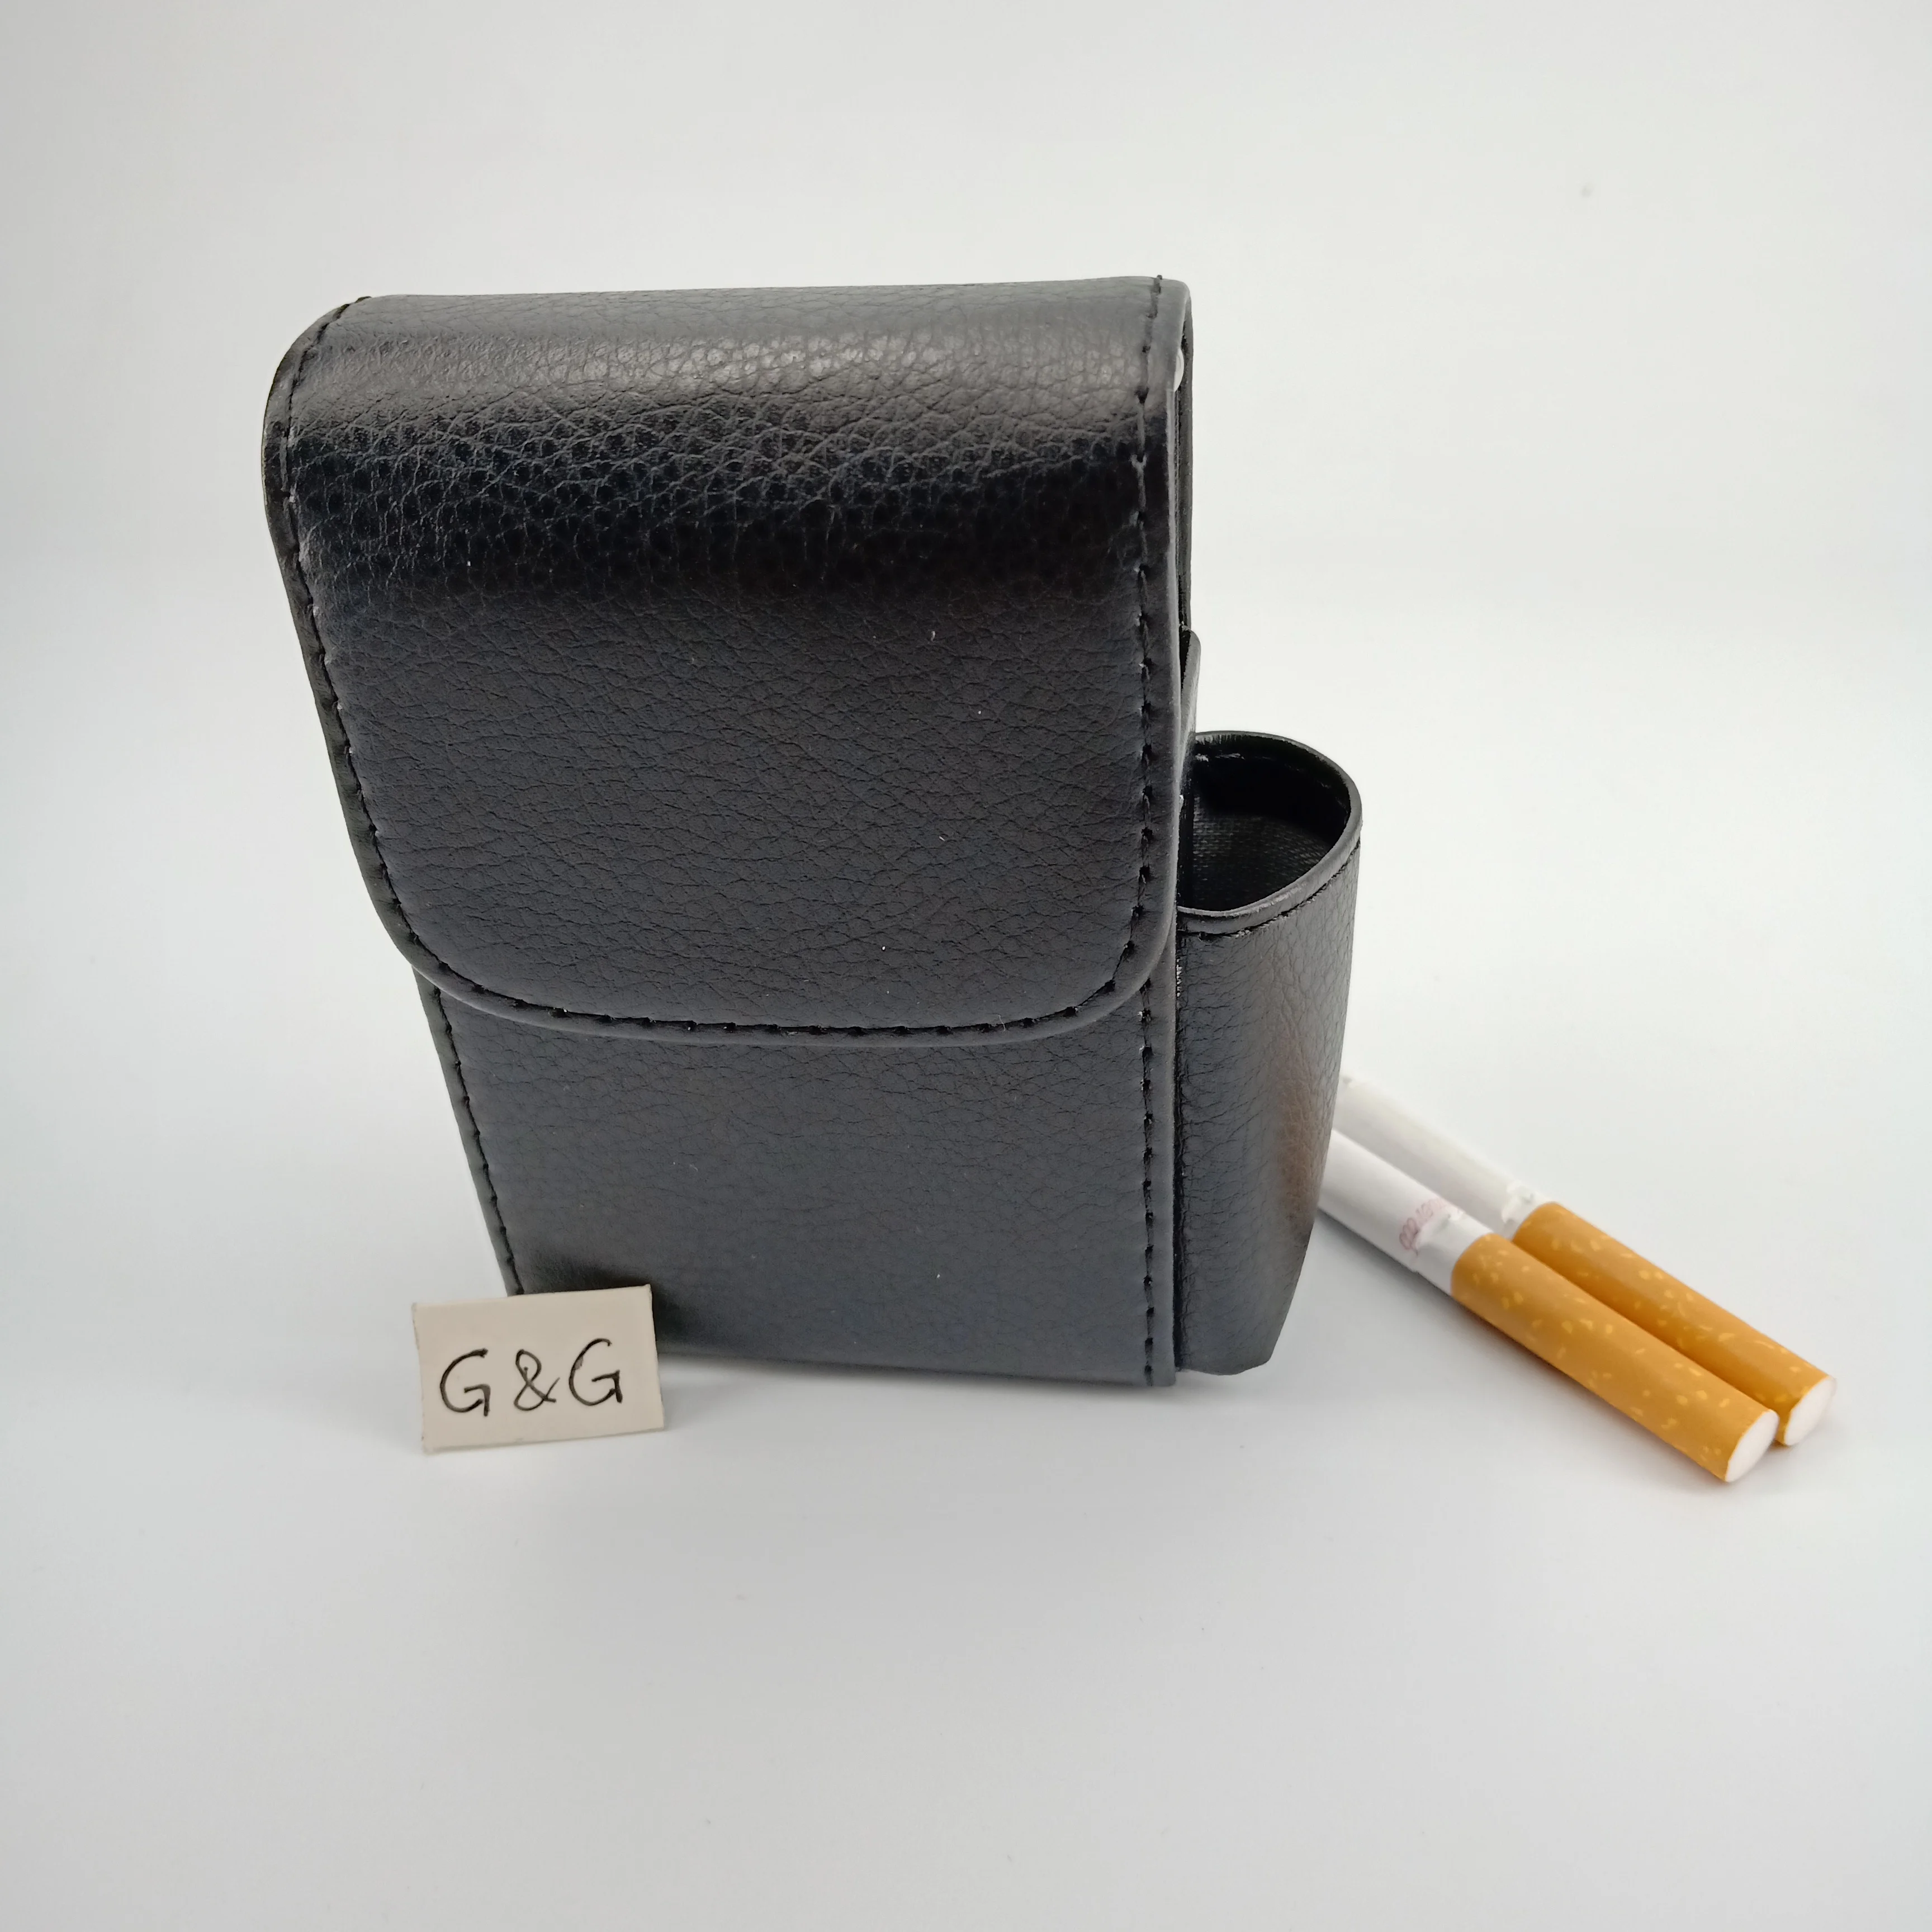 

Hot Sale Promotional Gifts Lychee Skin Cigarette Case for Men, Black,brown